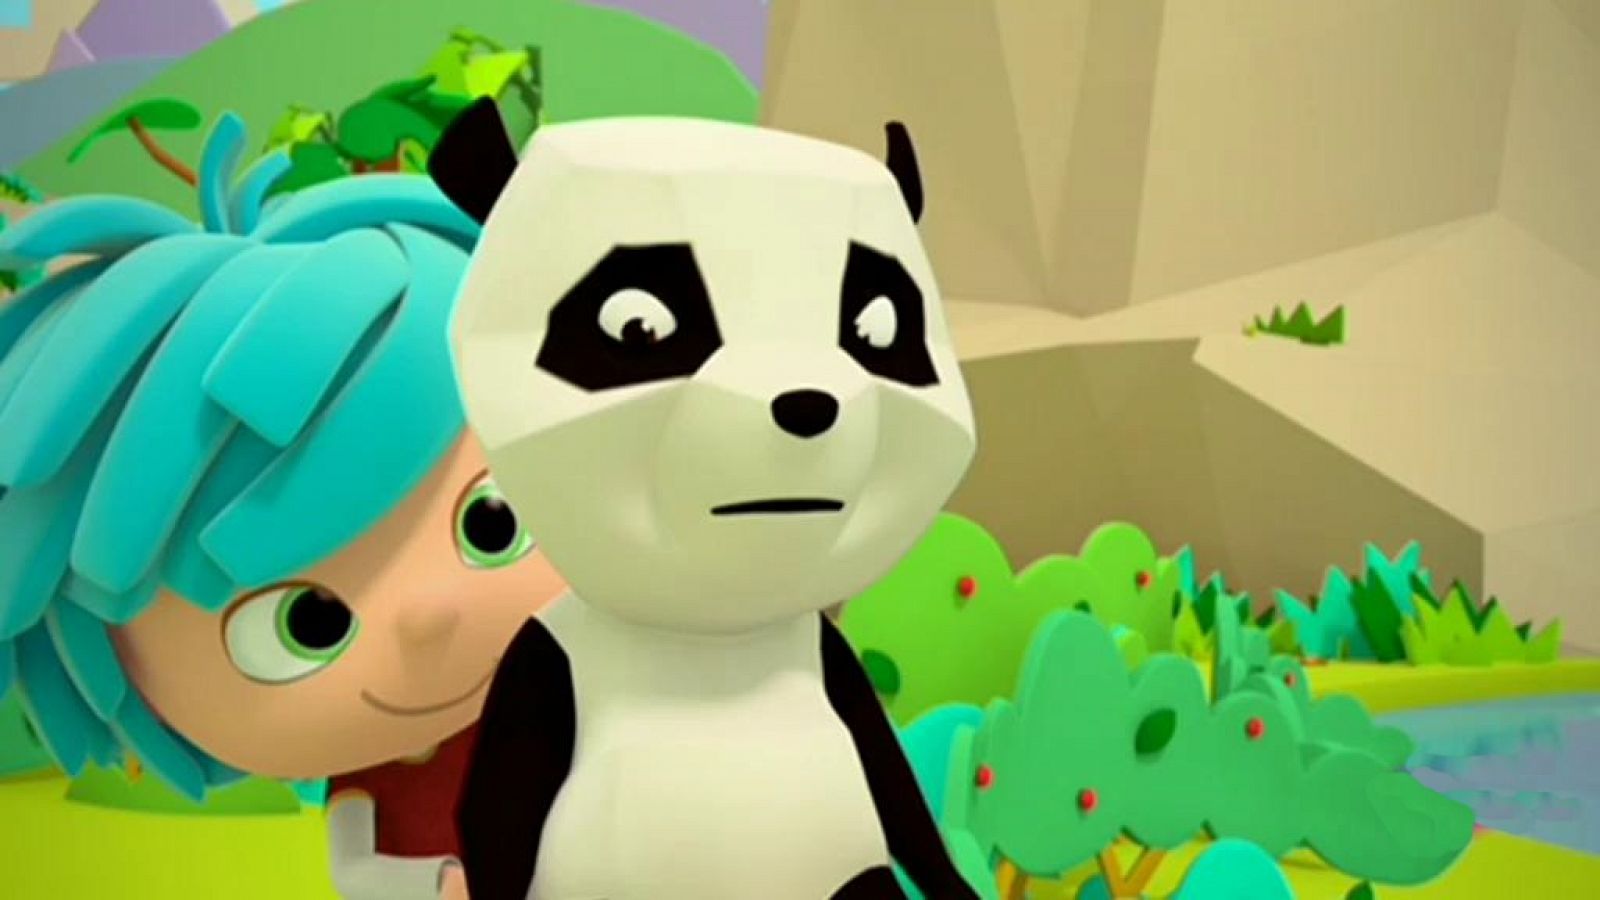 The jealous panda